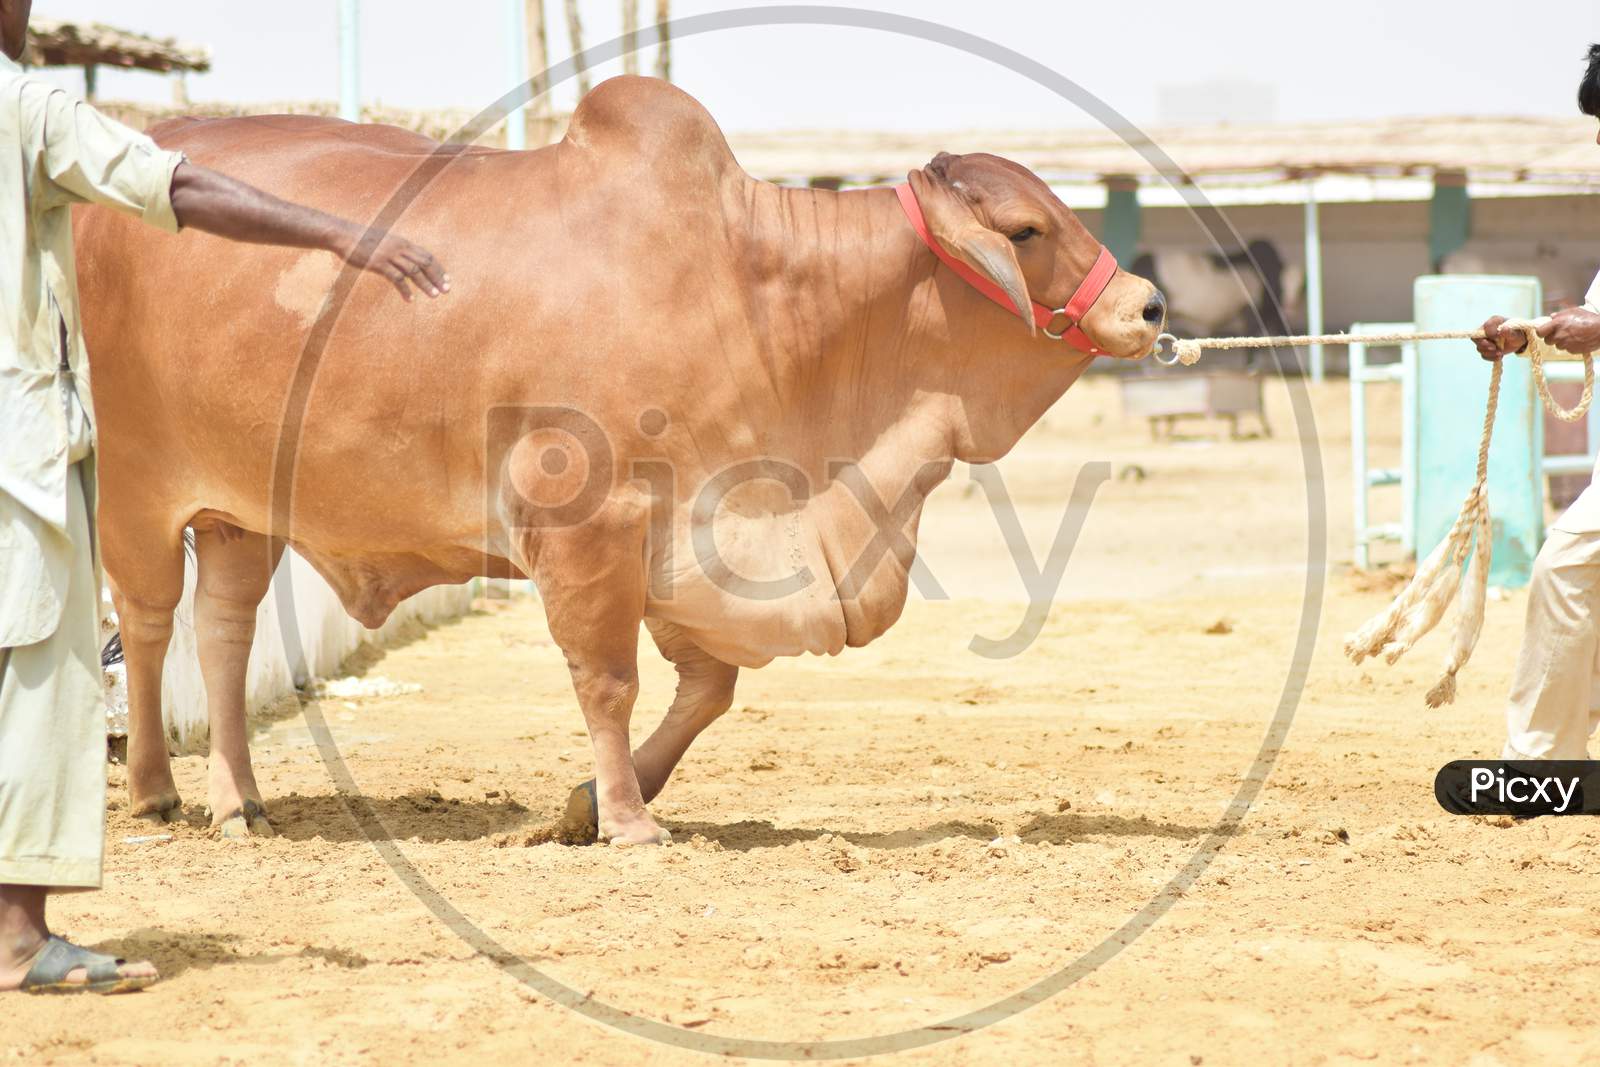 A Man pulling Brown Bull in Cattle Farm